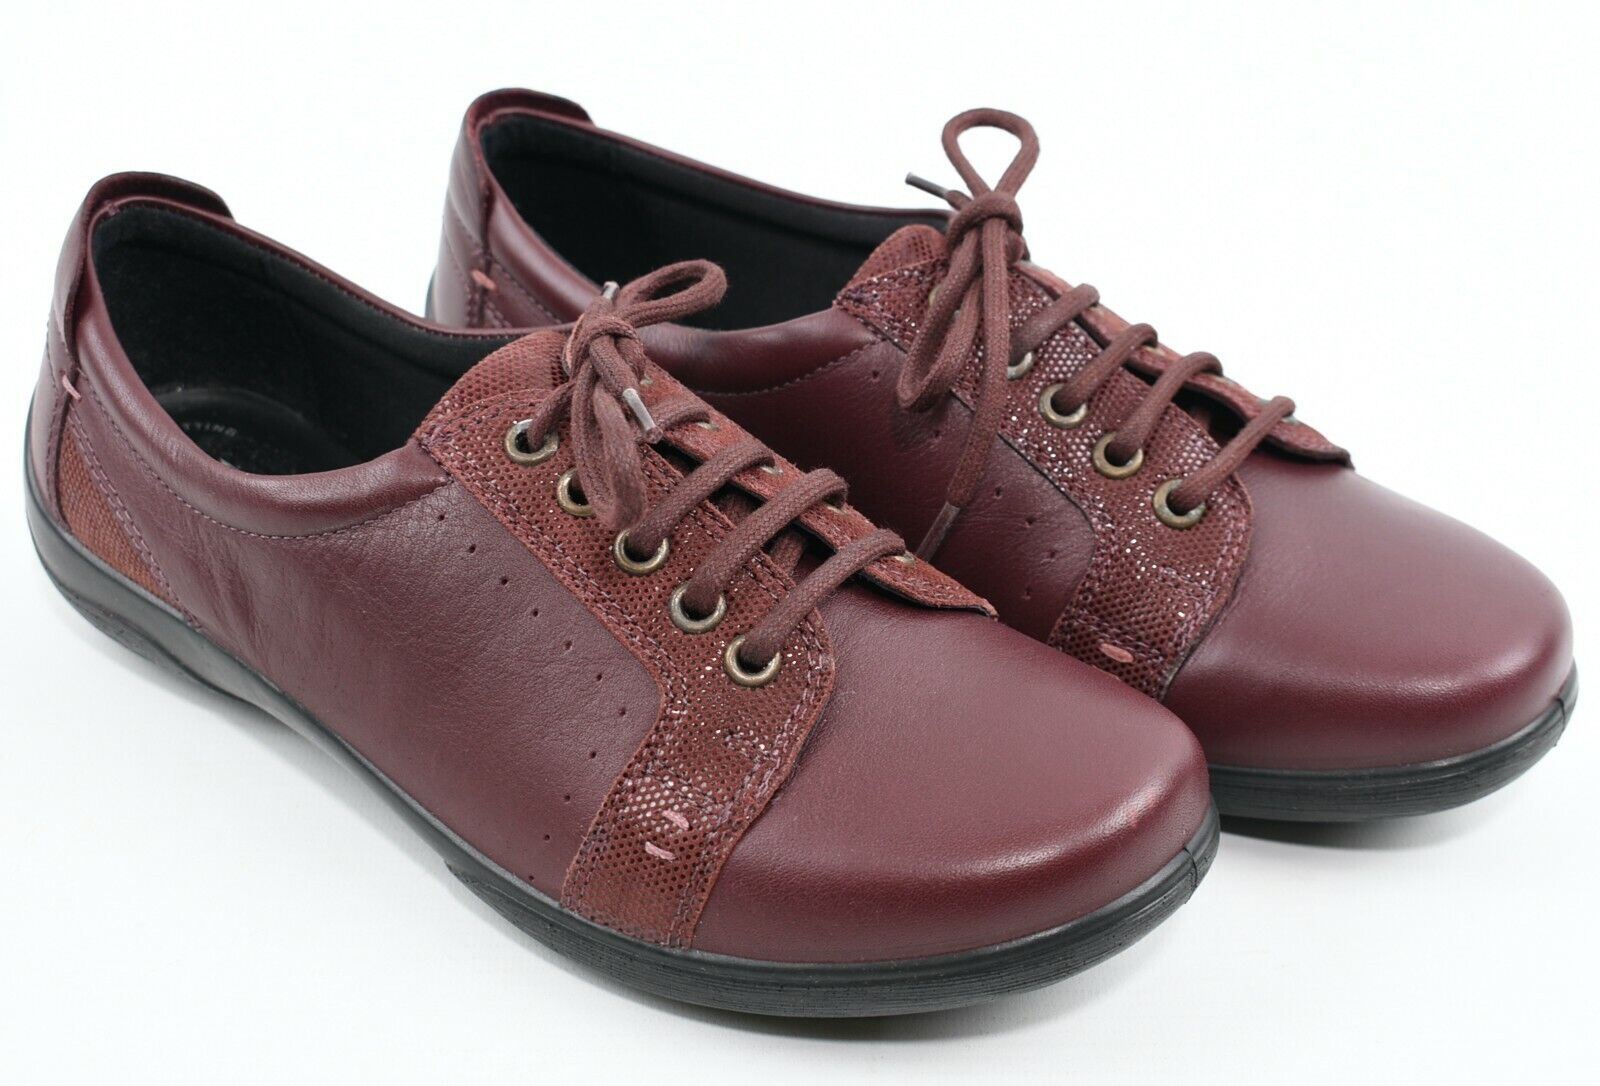 PADDERS Women's SONNET Leather Shoes, Plum, size UK 6 Super Wide Fit